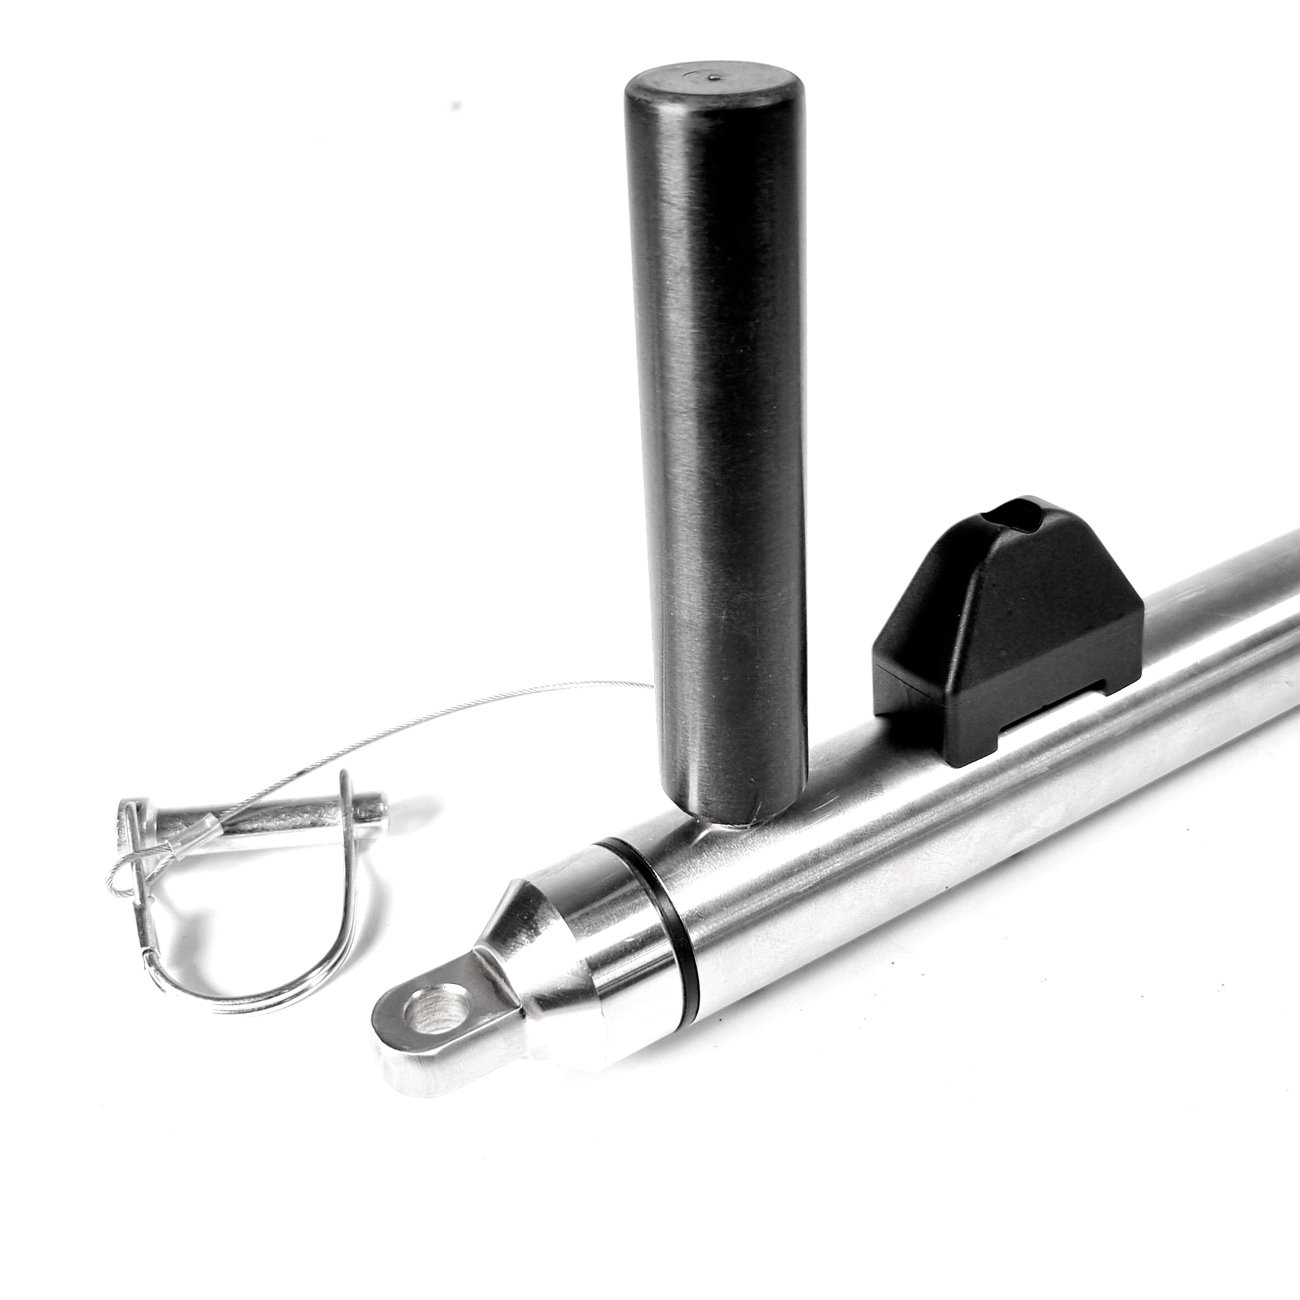 SL-stainless-steel-drawbar: Handle